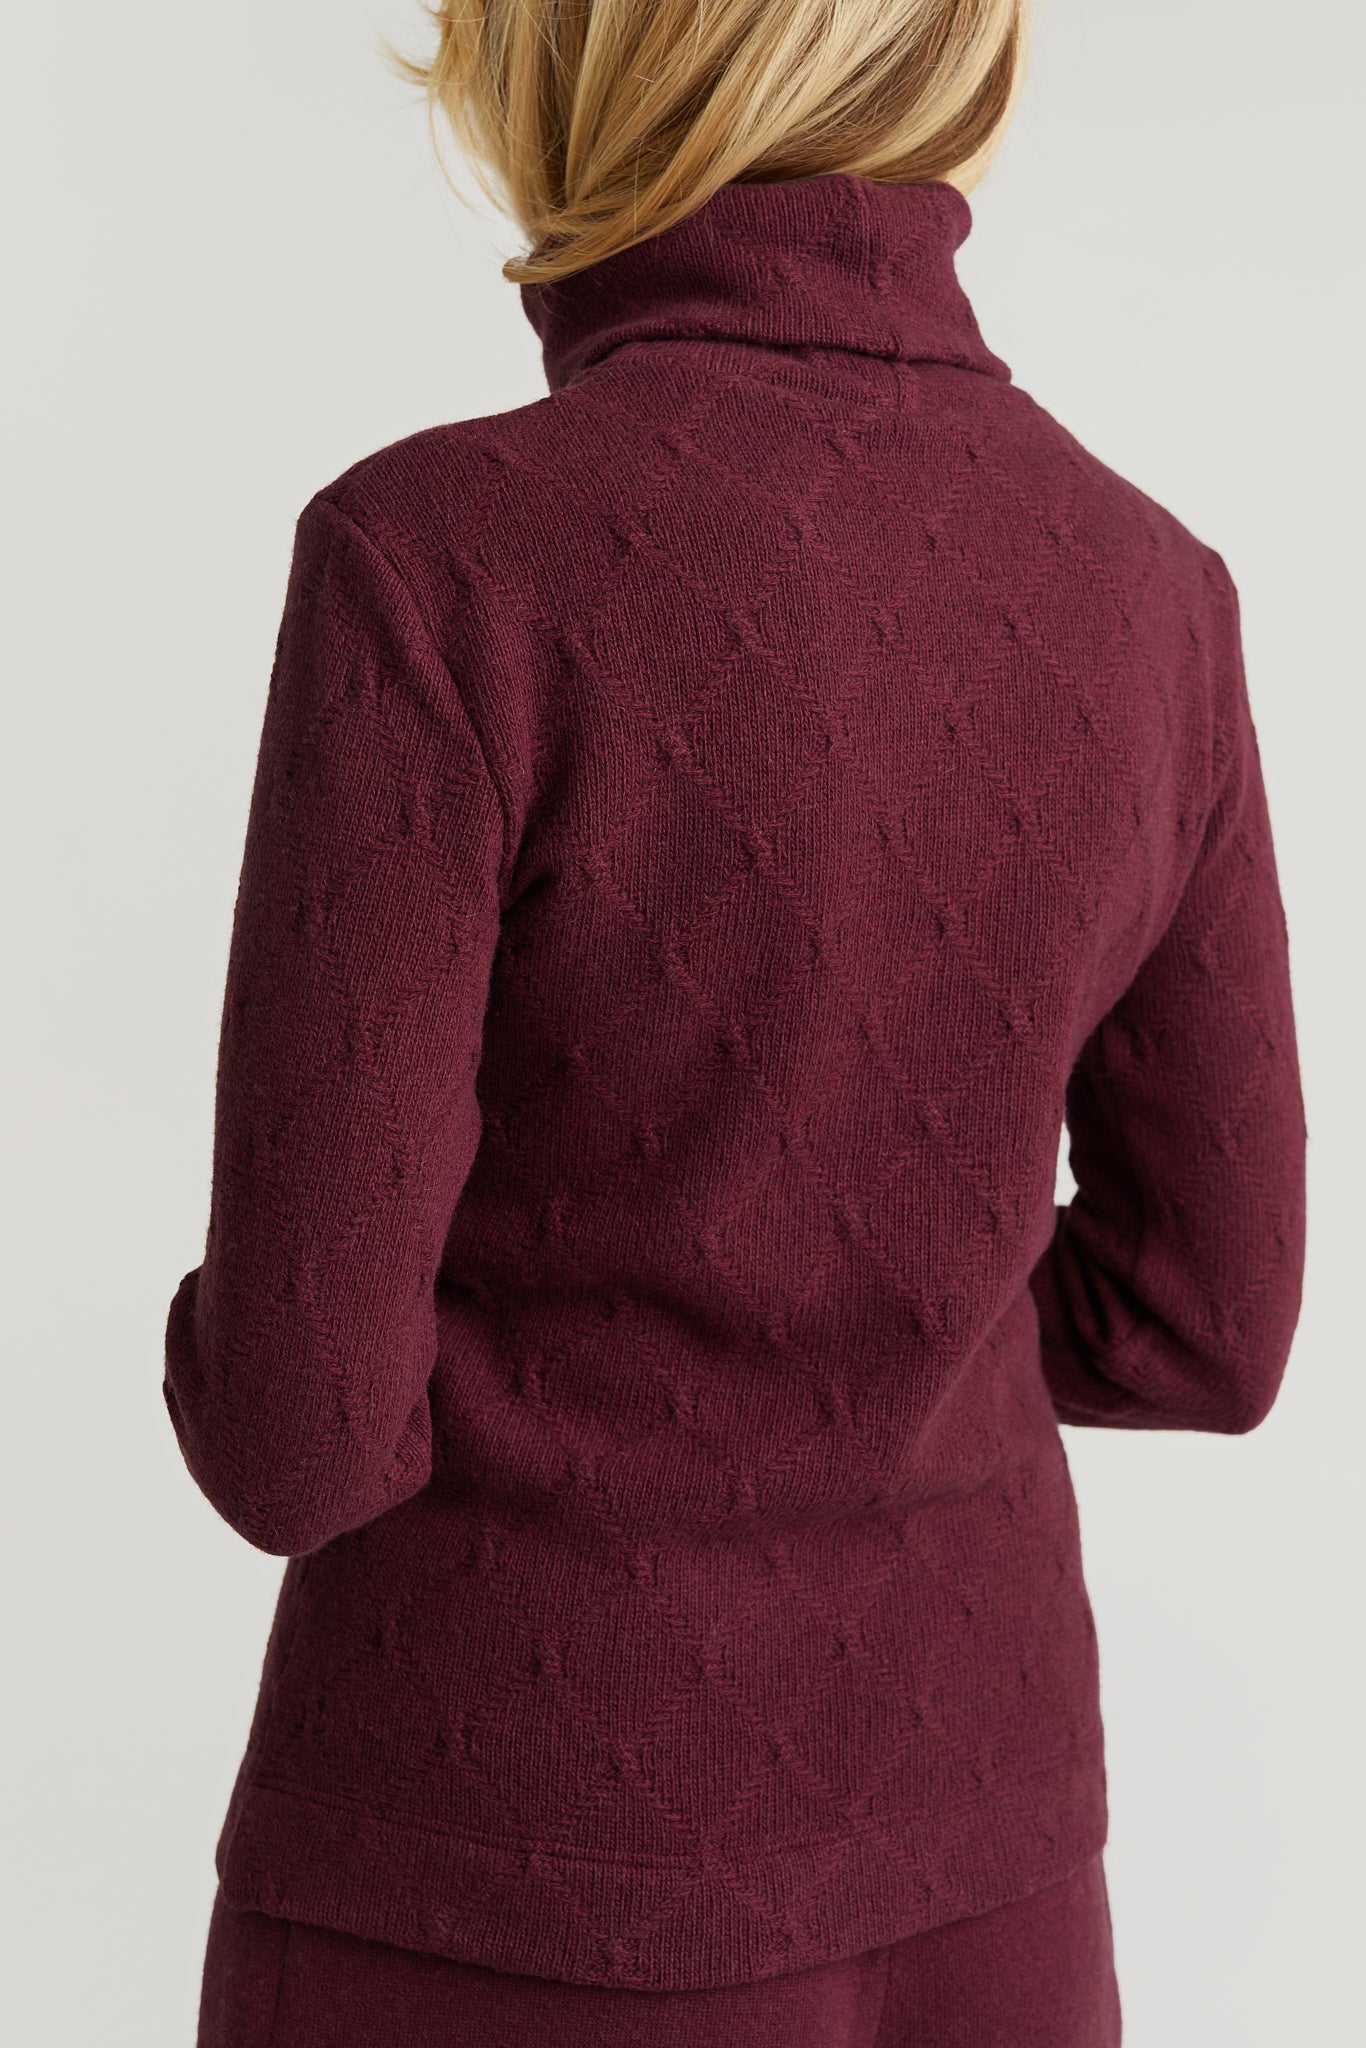 Gaudium Turtleneck Sweater With Pattern in Burgundy